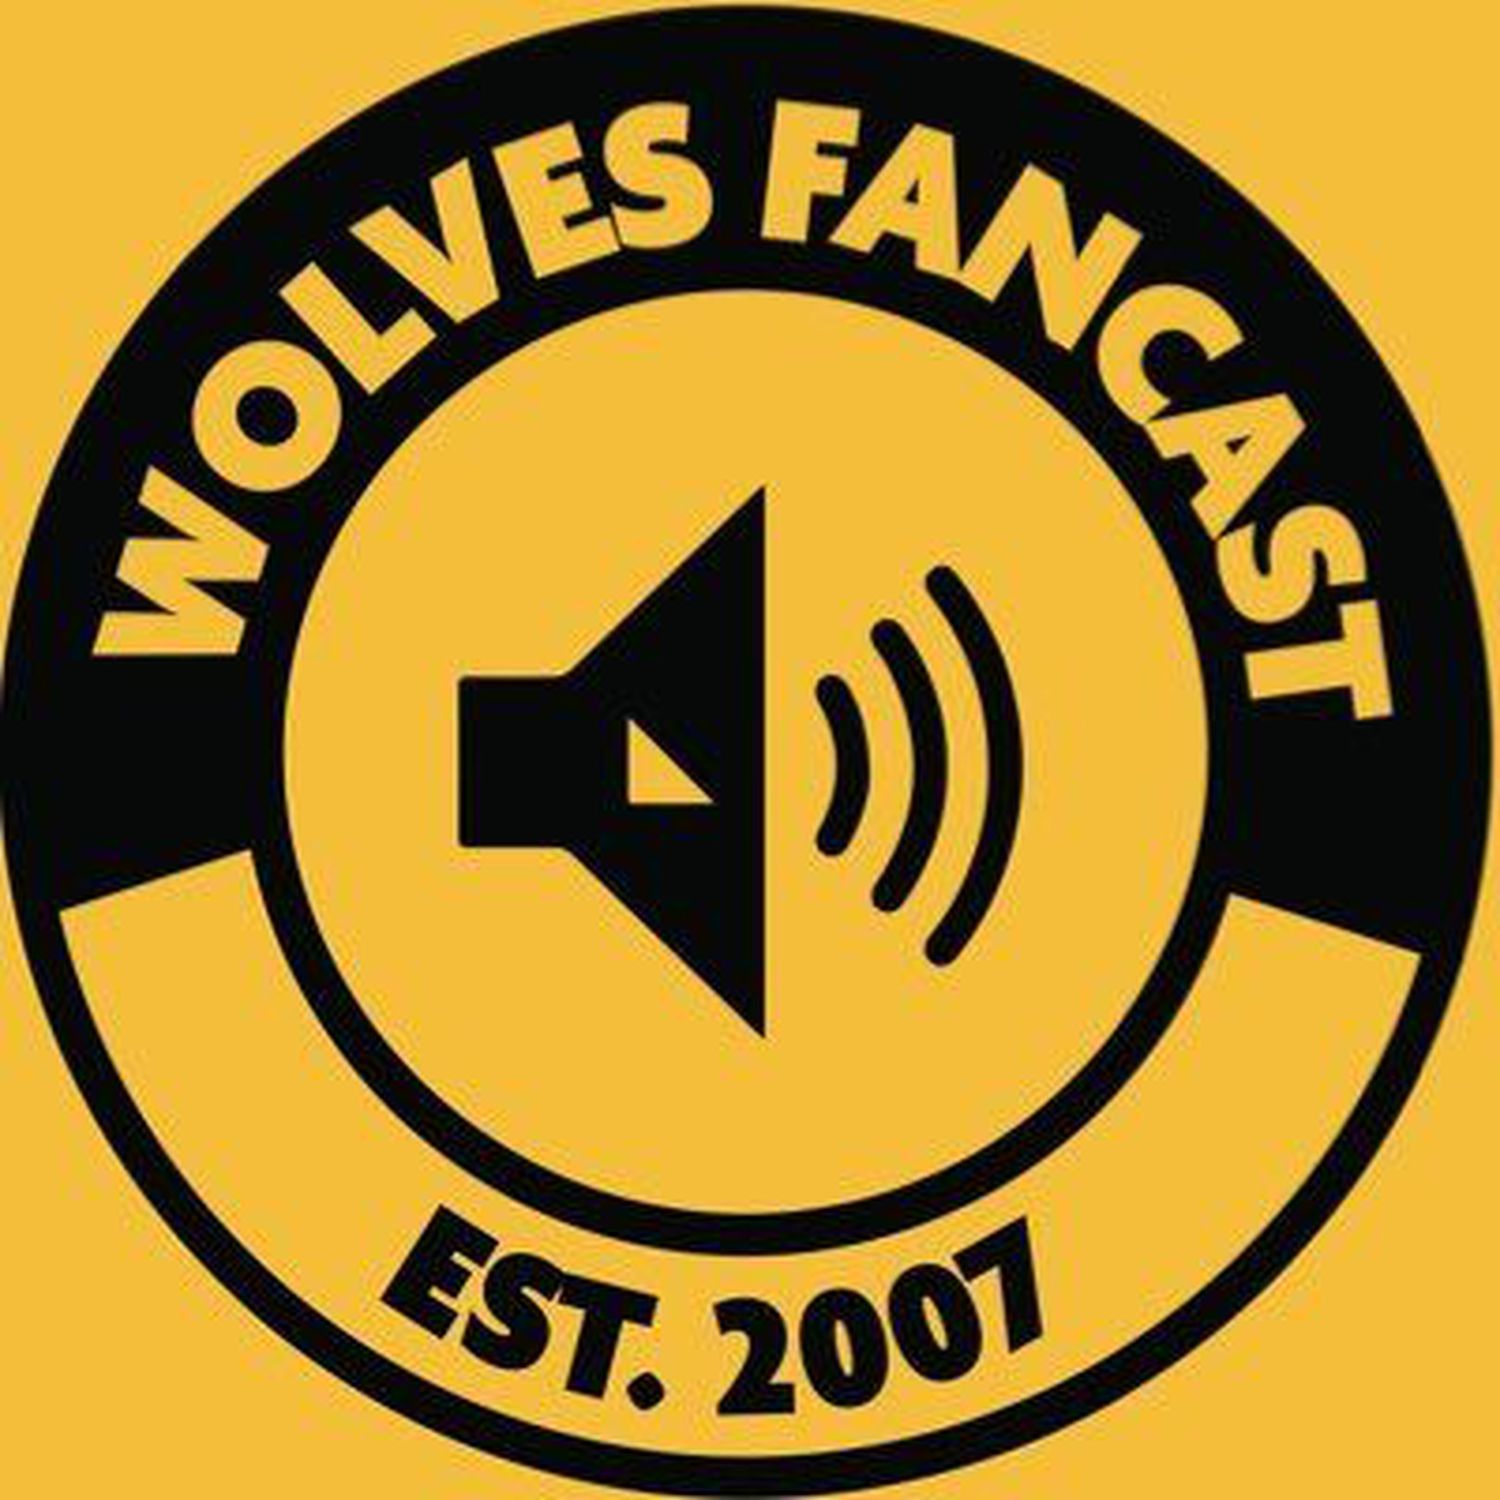 The Brazilian Ben Shephard | Wolves vs Spurs review | Adama Traore | Ruben Neves | Transfer update